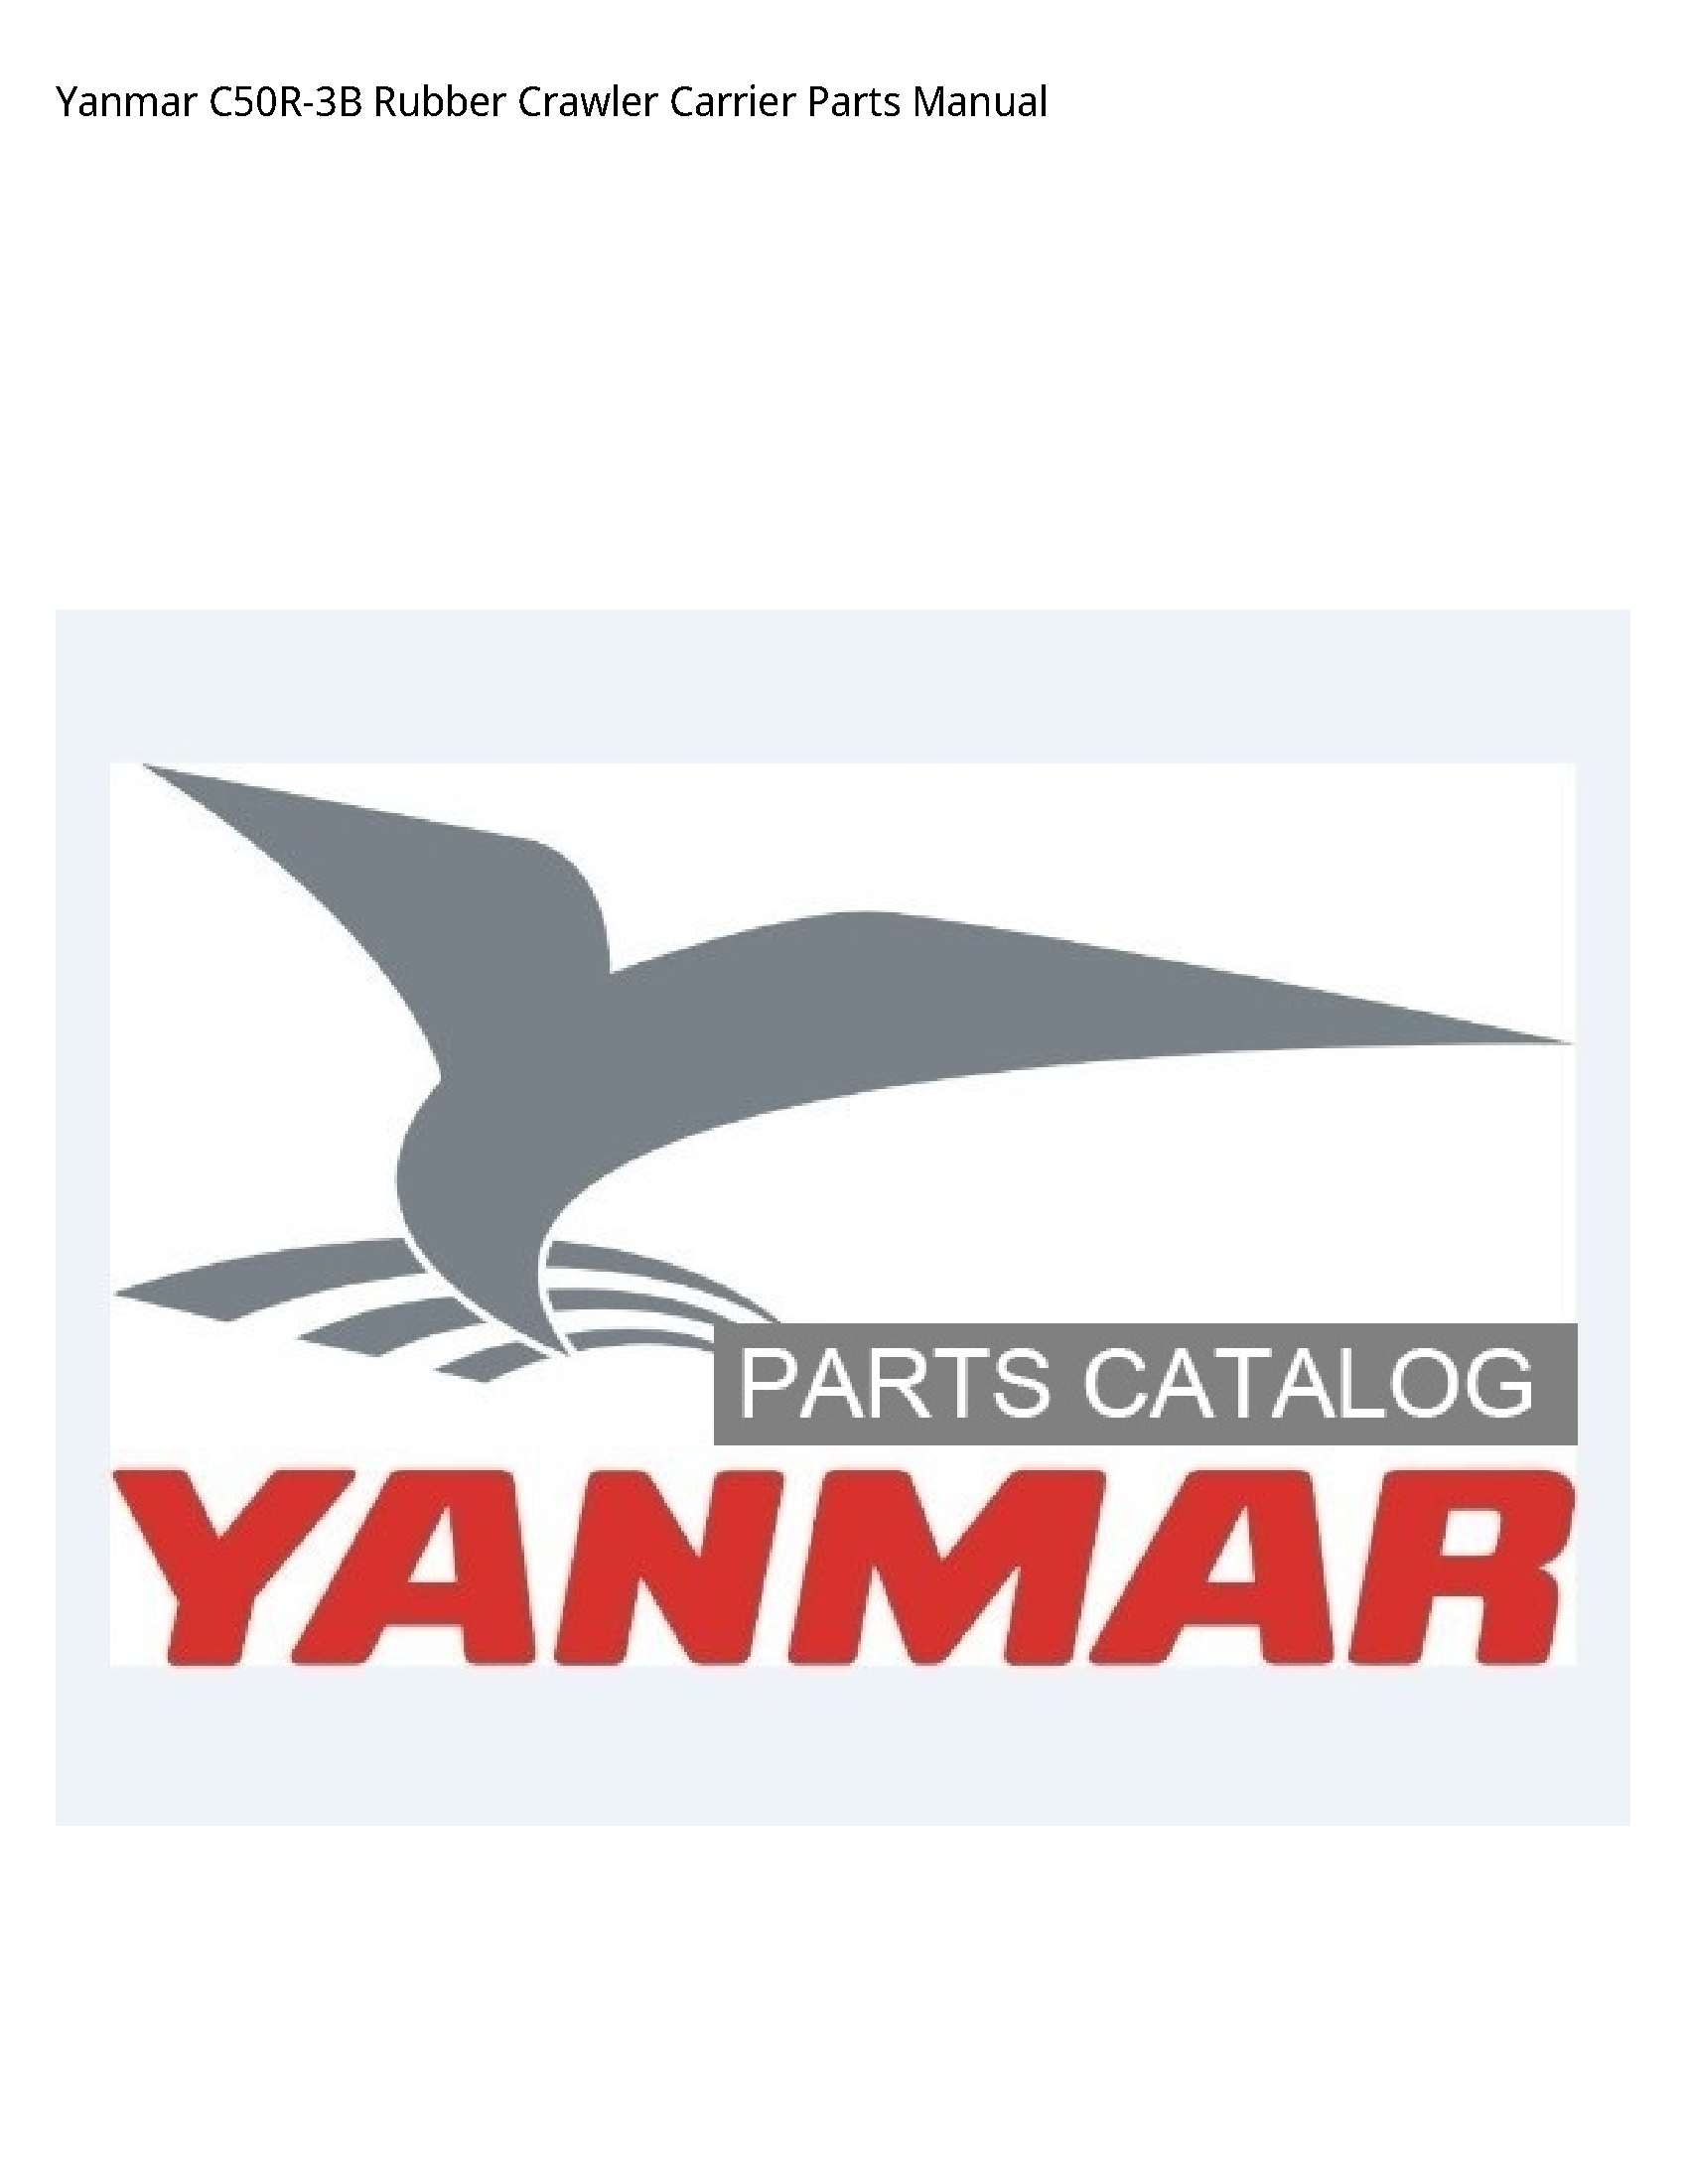 Yanmar C50R-3B Rubber Crawler Carrier Parts manual